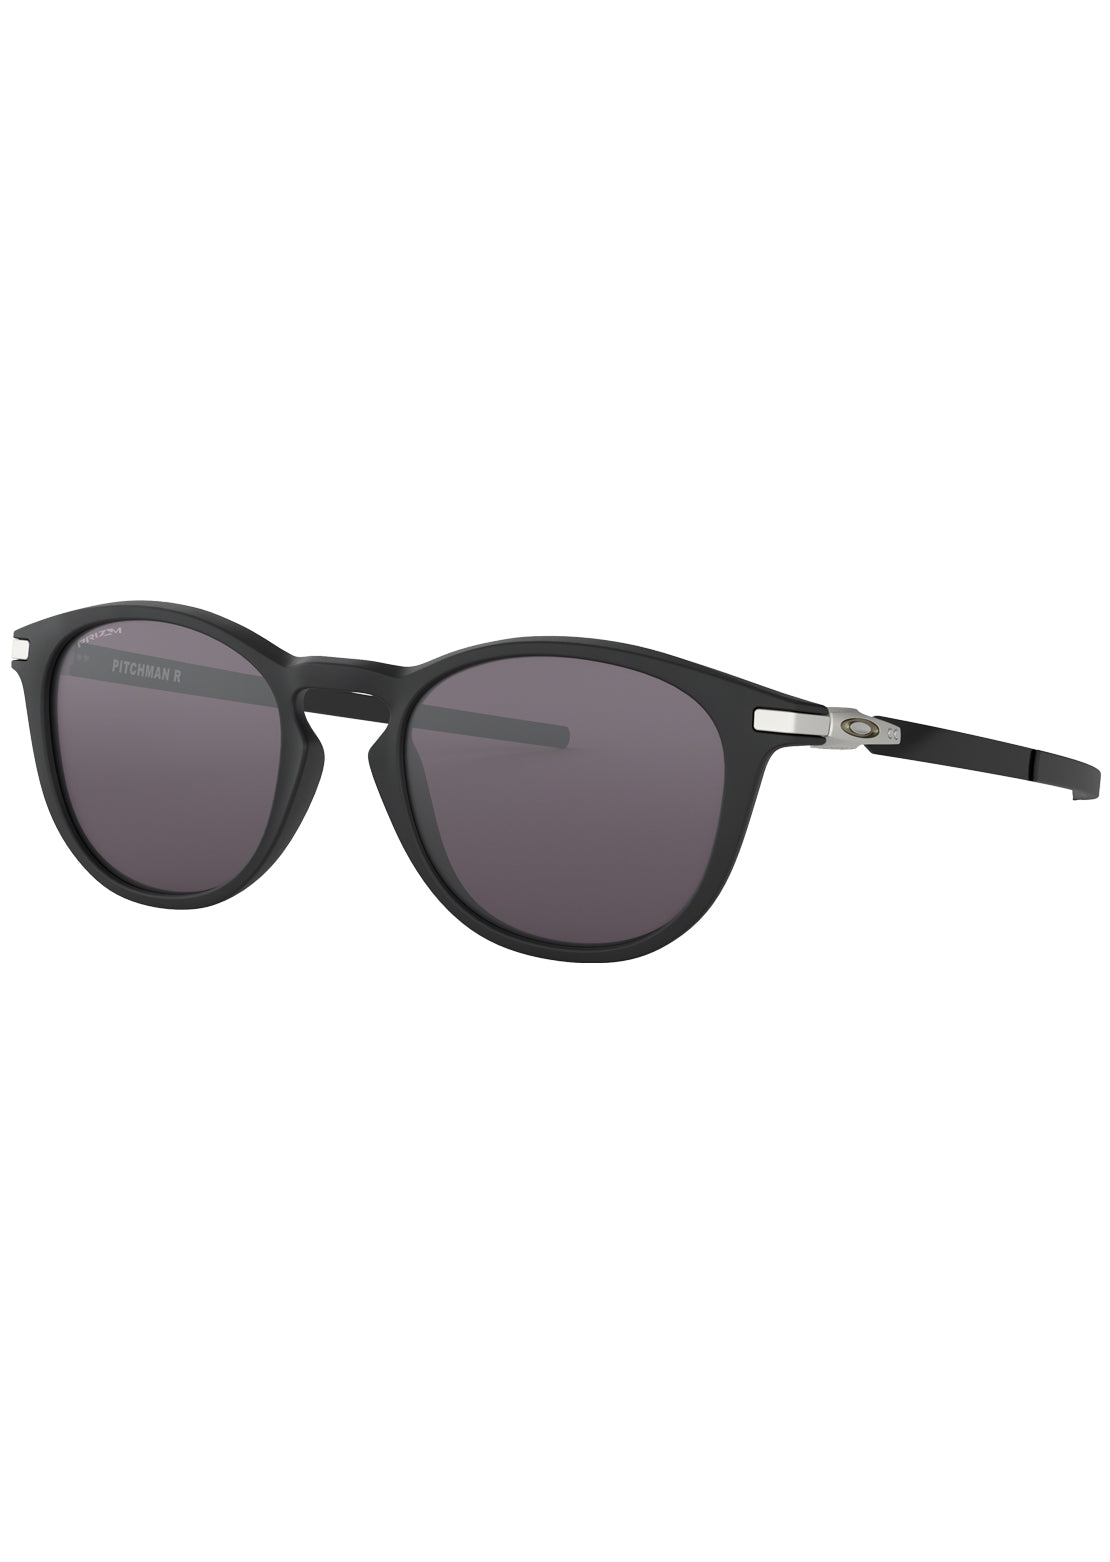 Oakley Men’s Pitchman R Sunglasses Satin Black/Prizm Grey